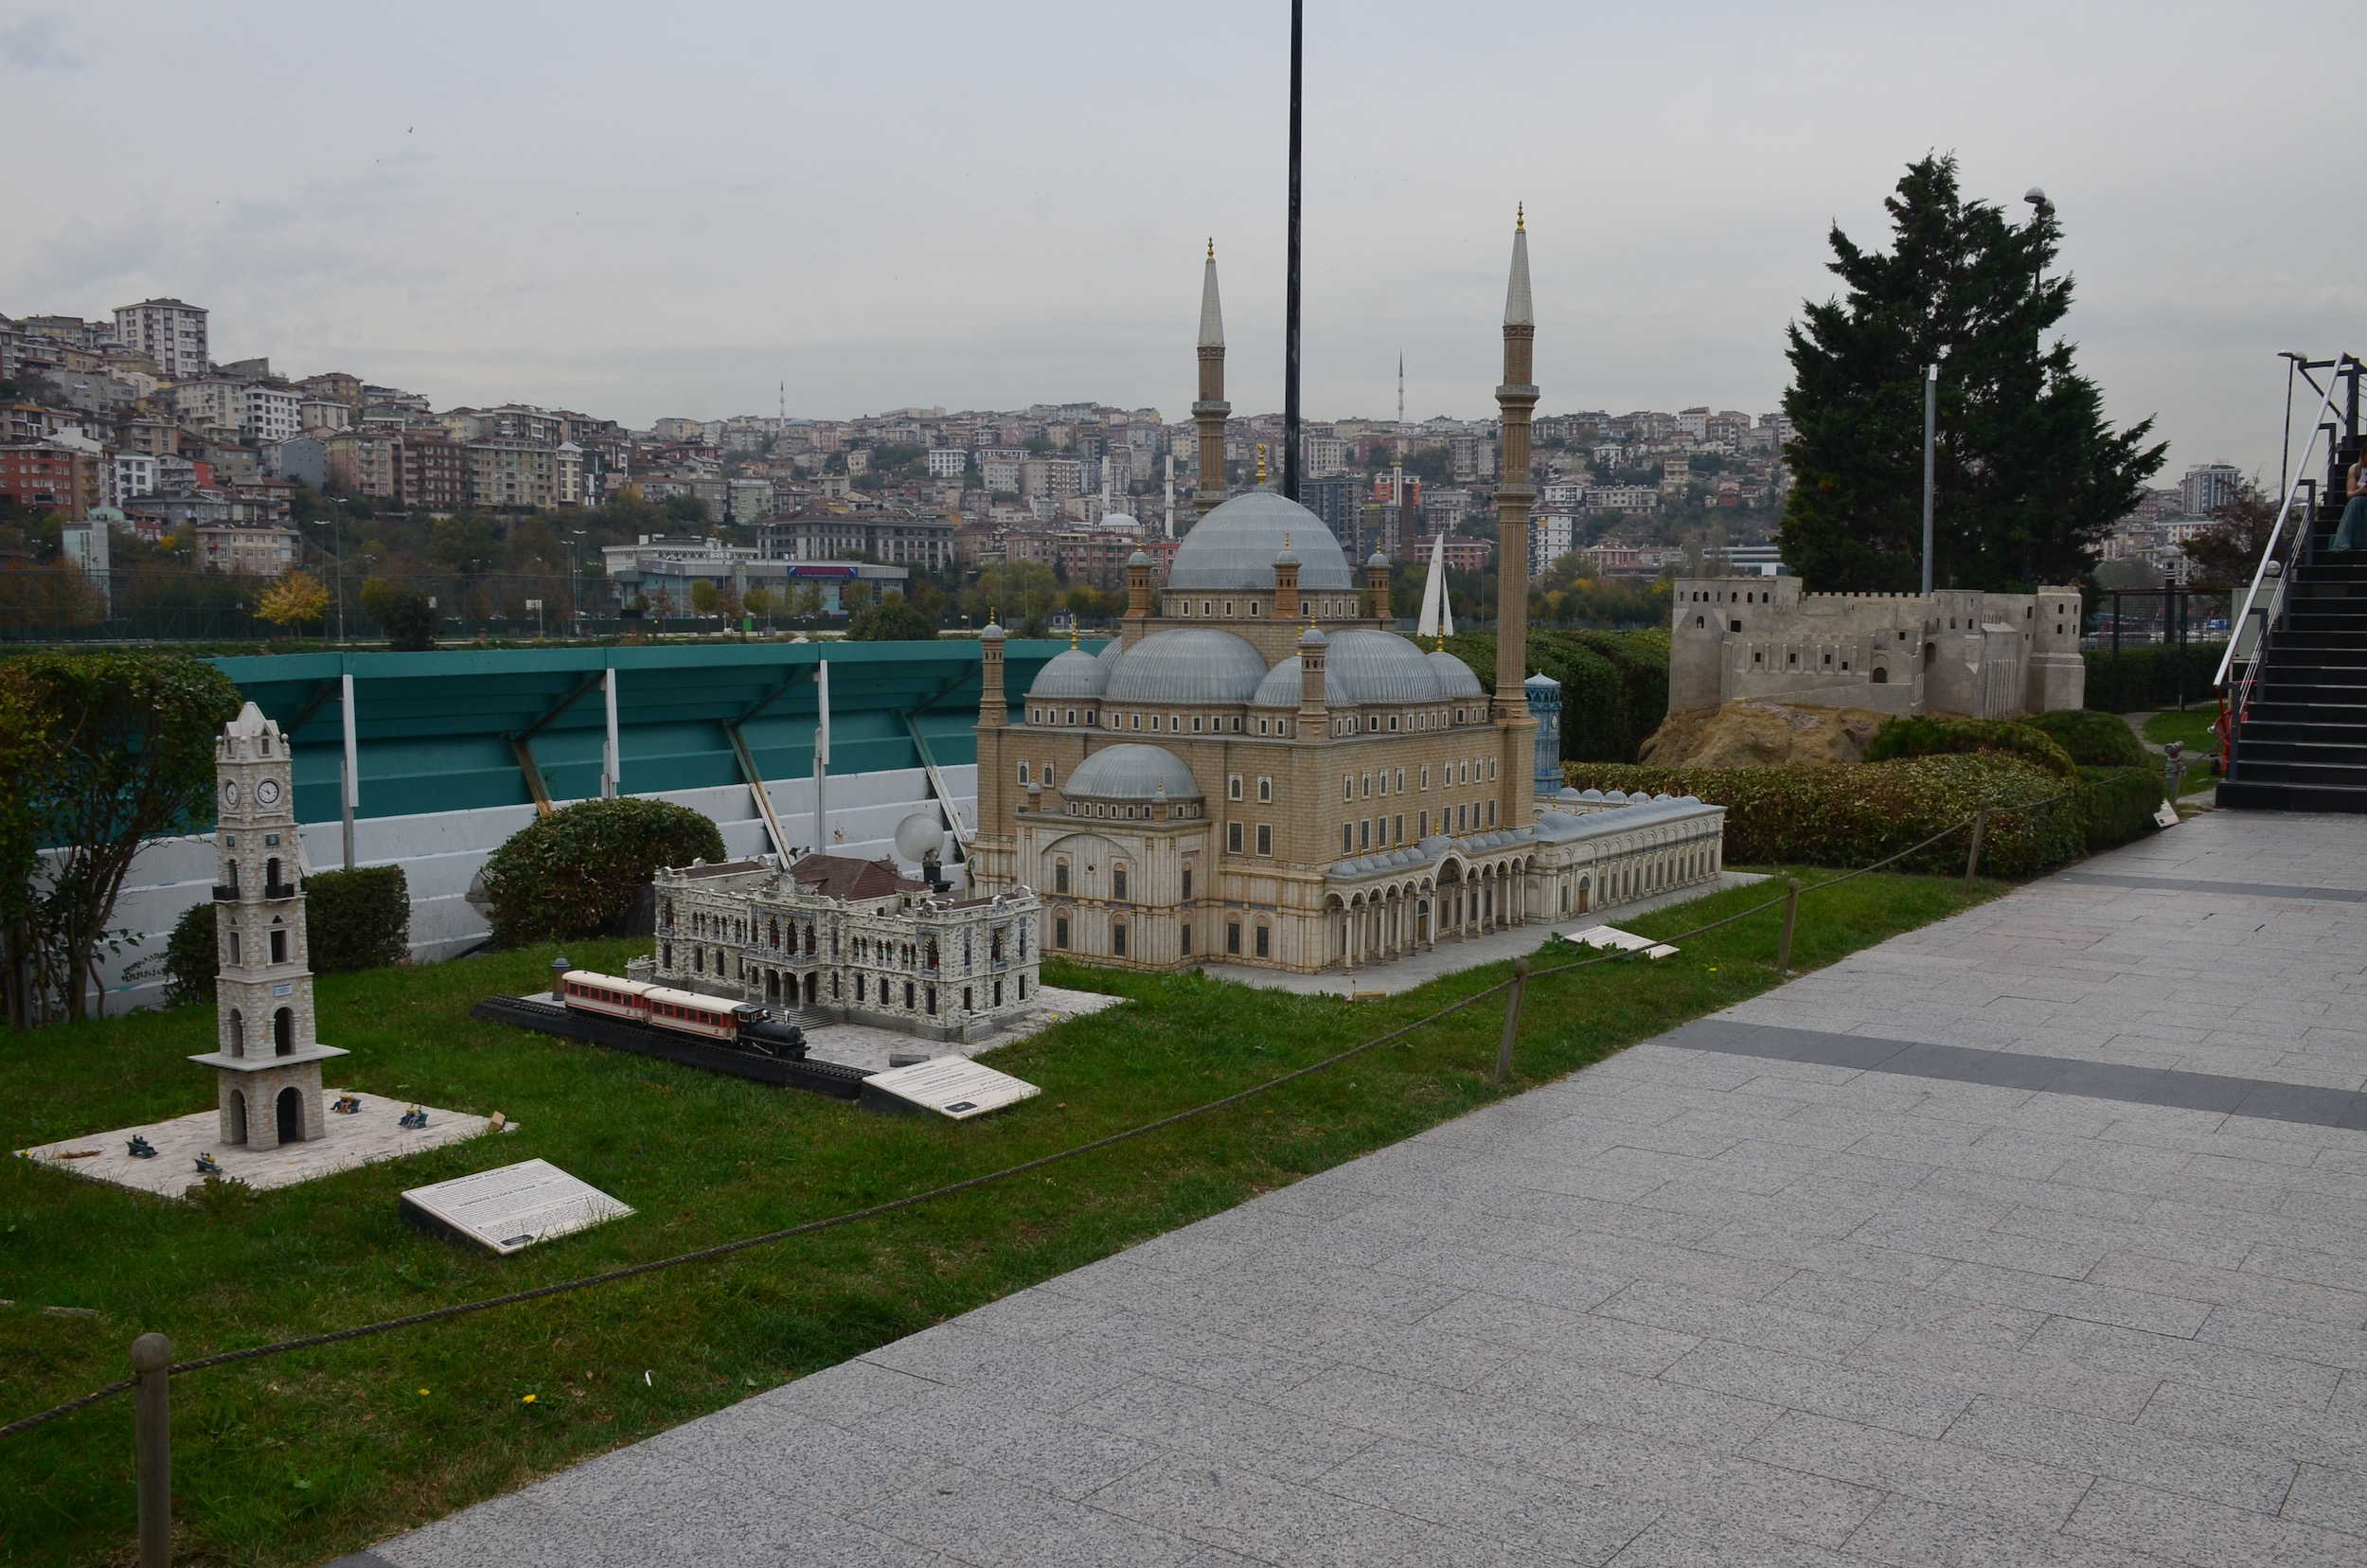 Works from Overseas at Miniatürk in Istanbul, Turkey